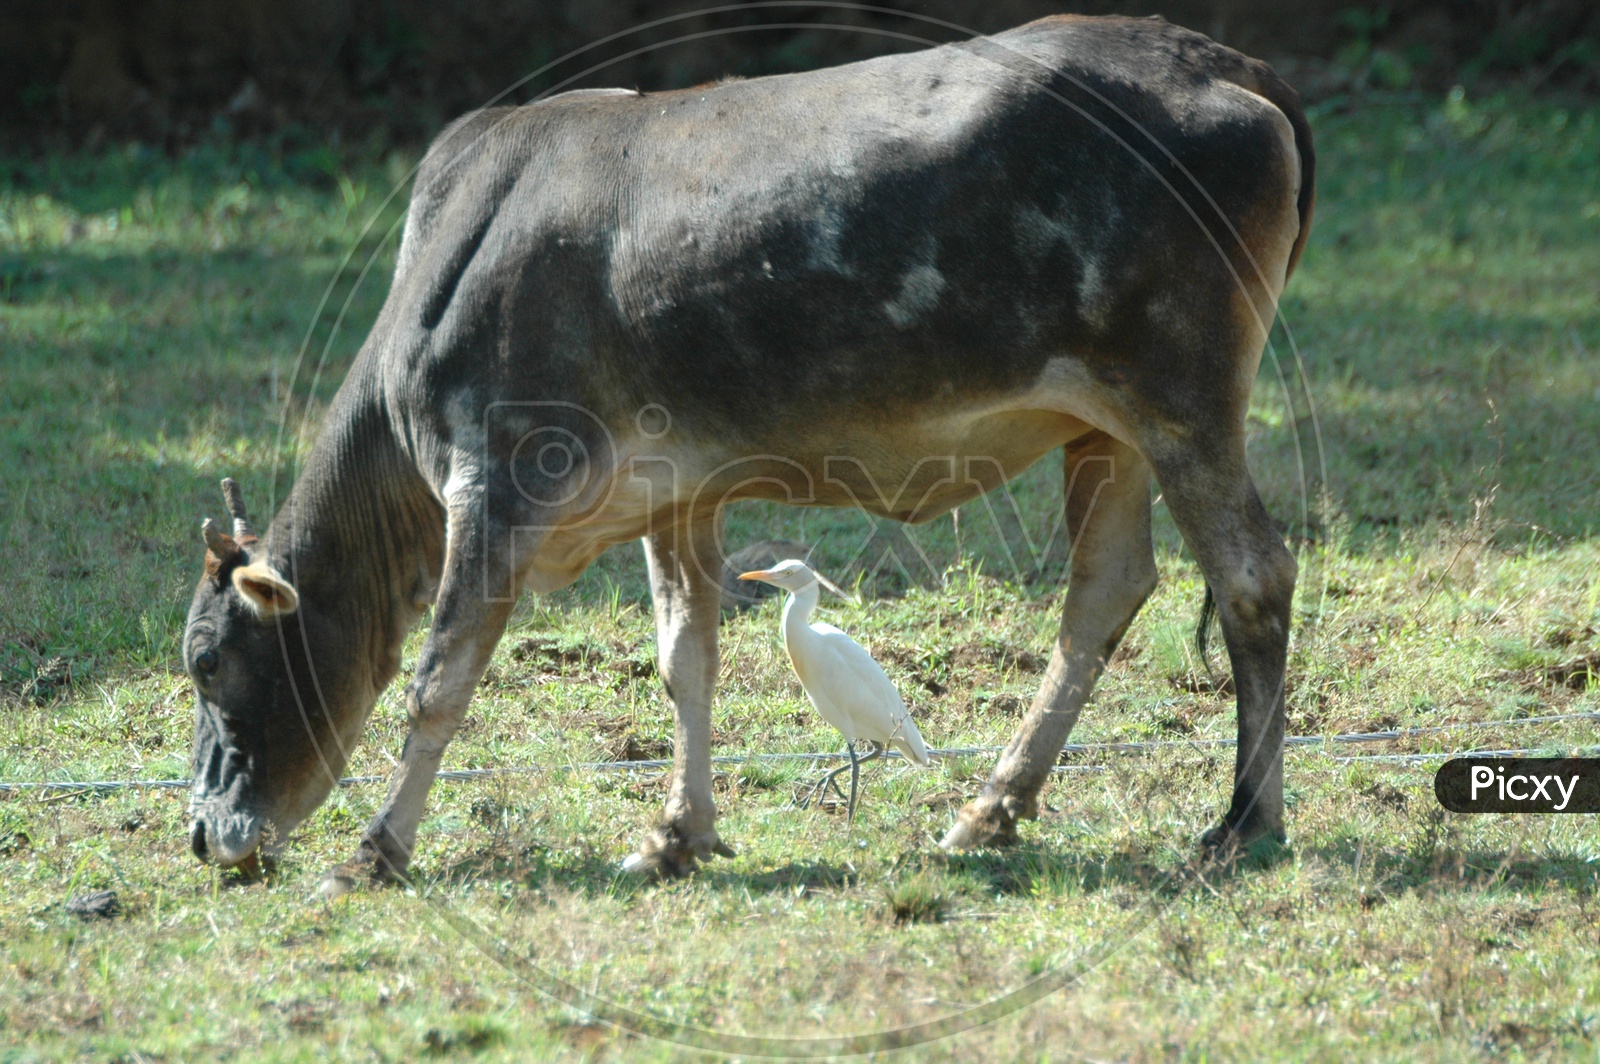 Cattle egret near a cow